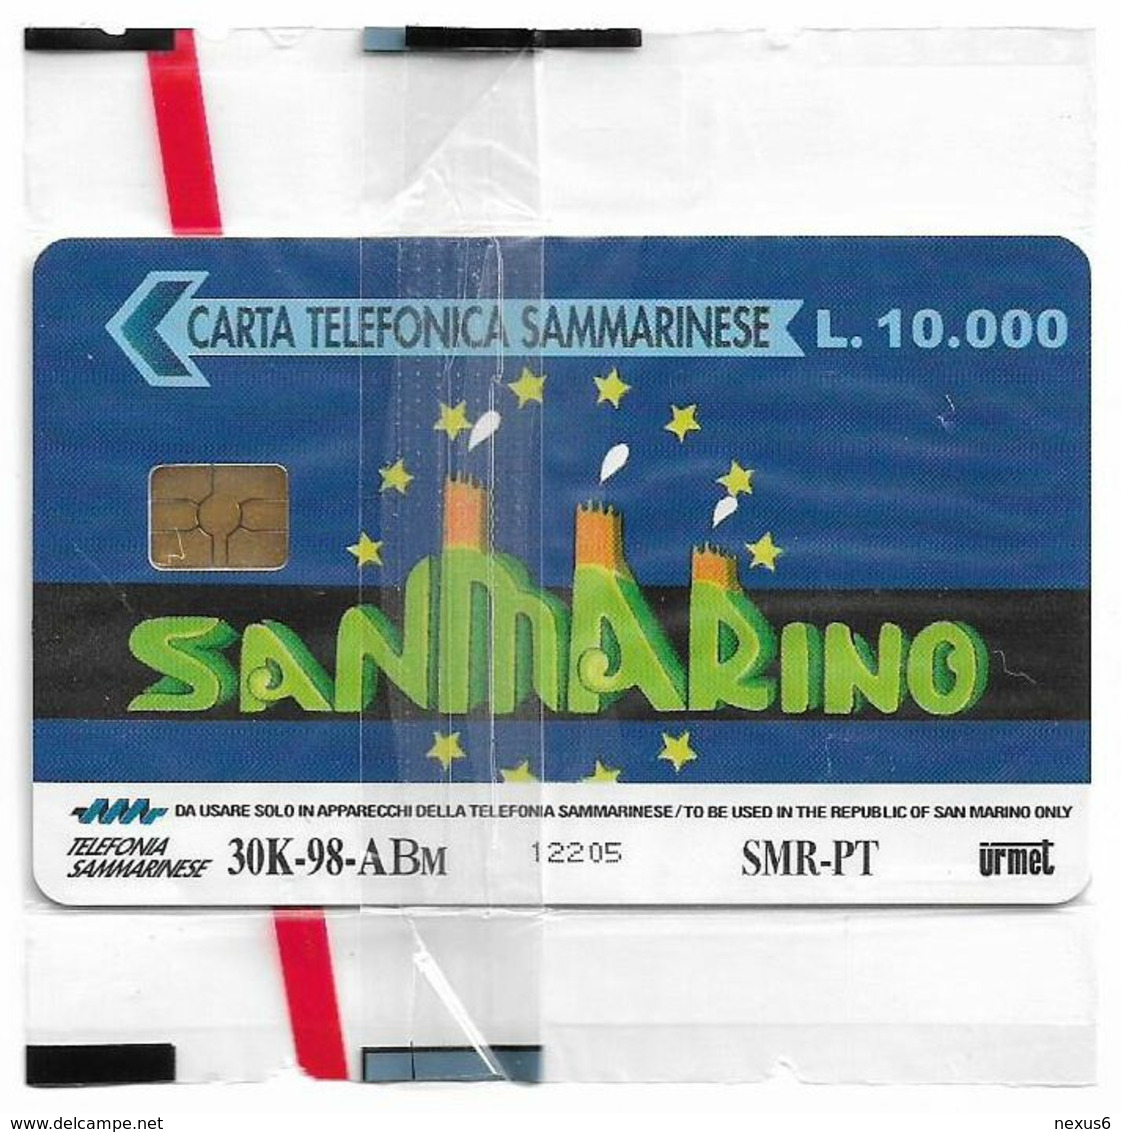 San Marino (Chip) - RSM-034 - Phonecard Expos - Europa Card Show '98 - 08.1998, 10.000L, 30.000ex, NSB - San Marino